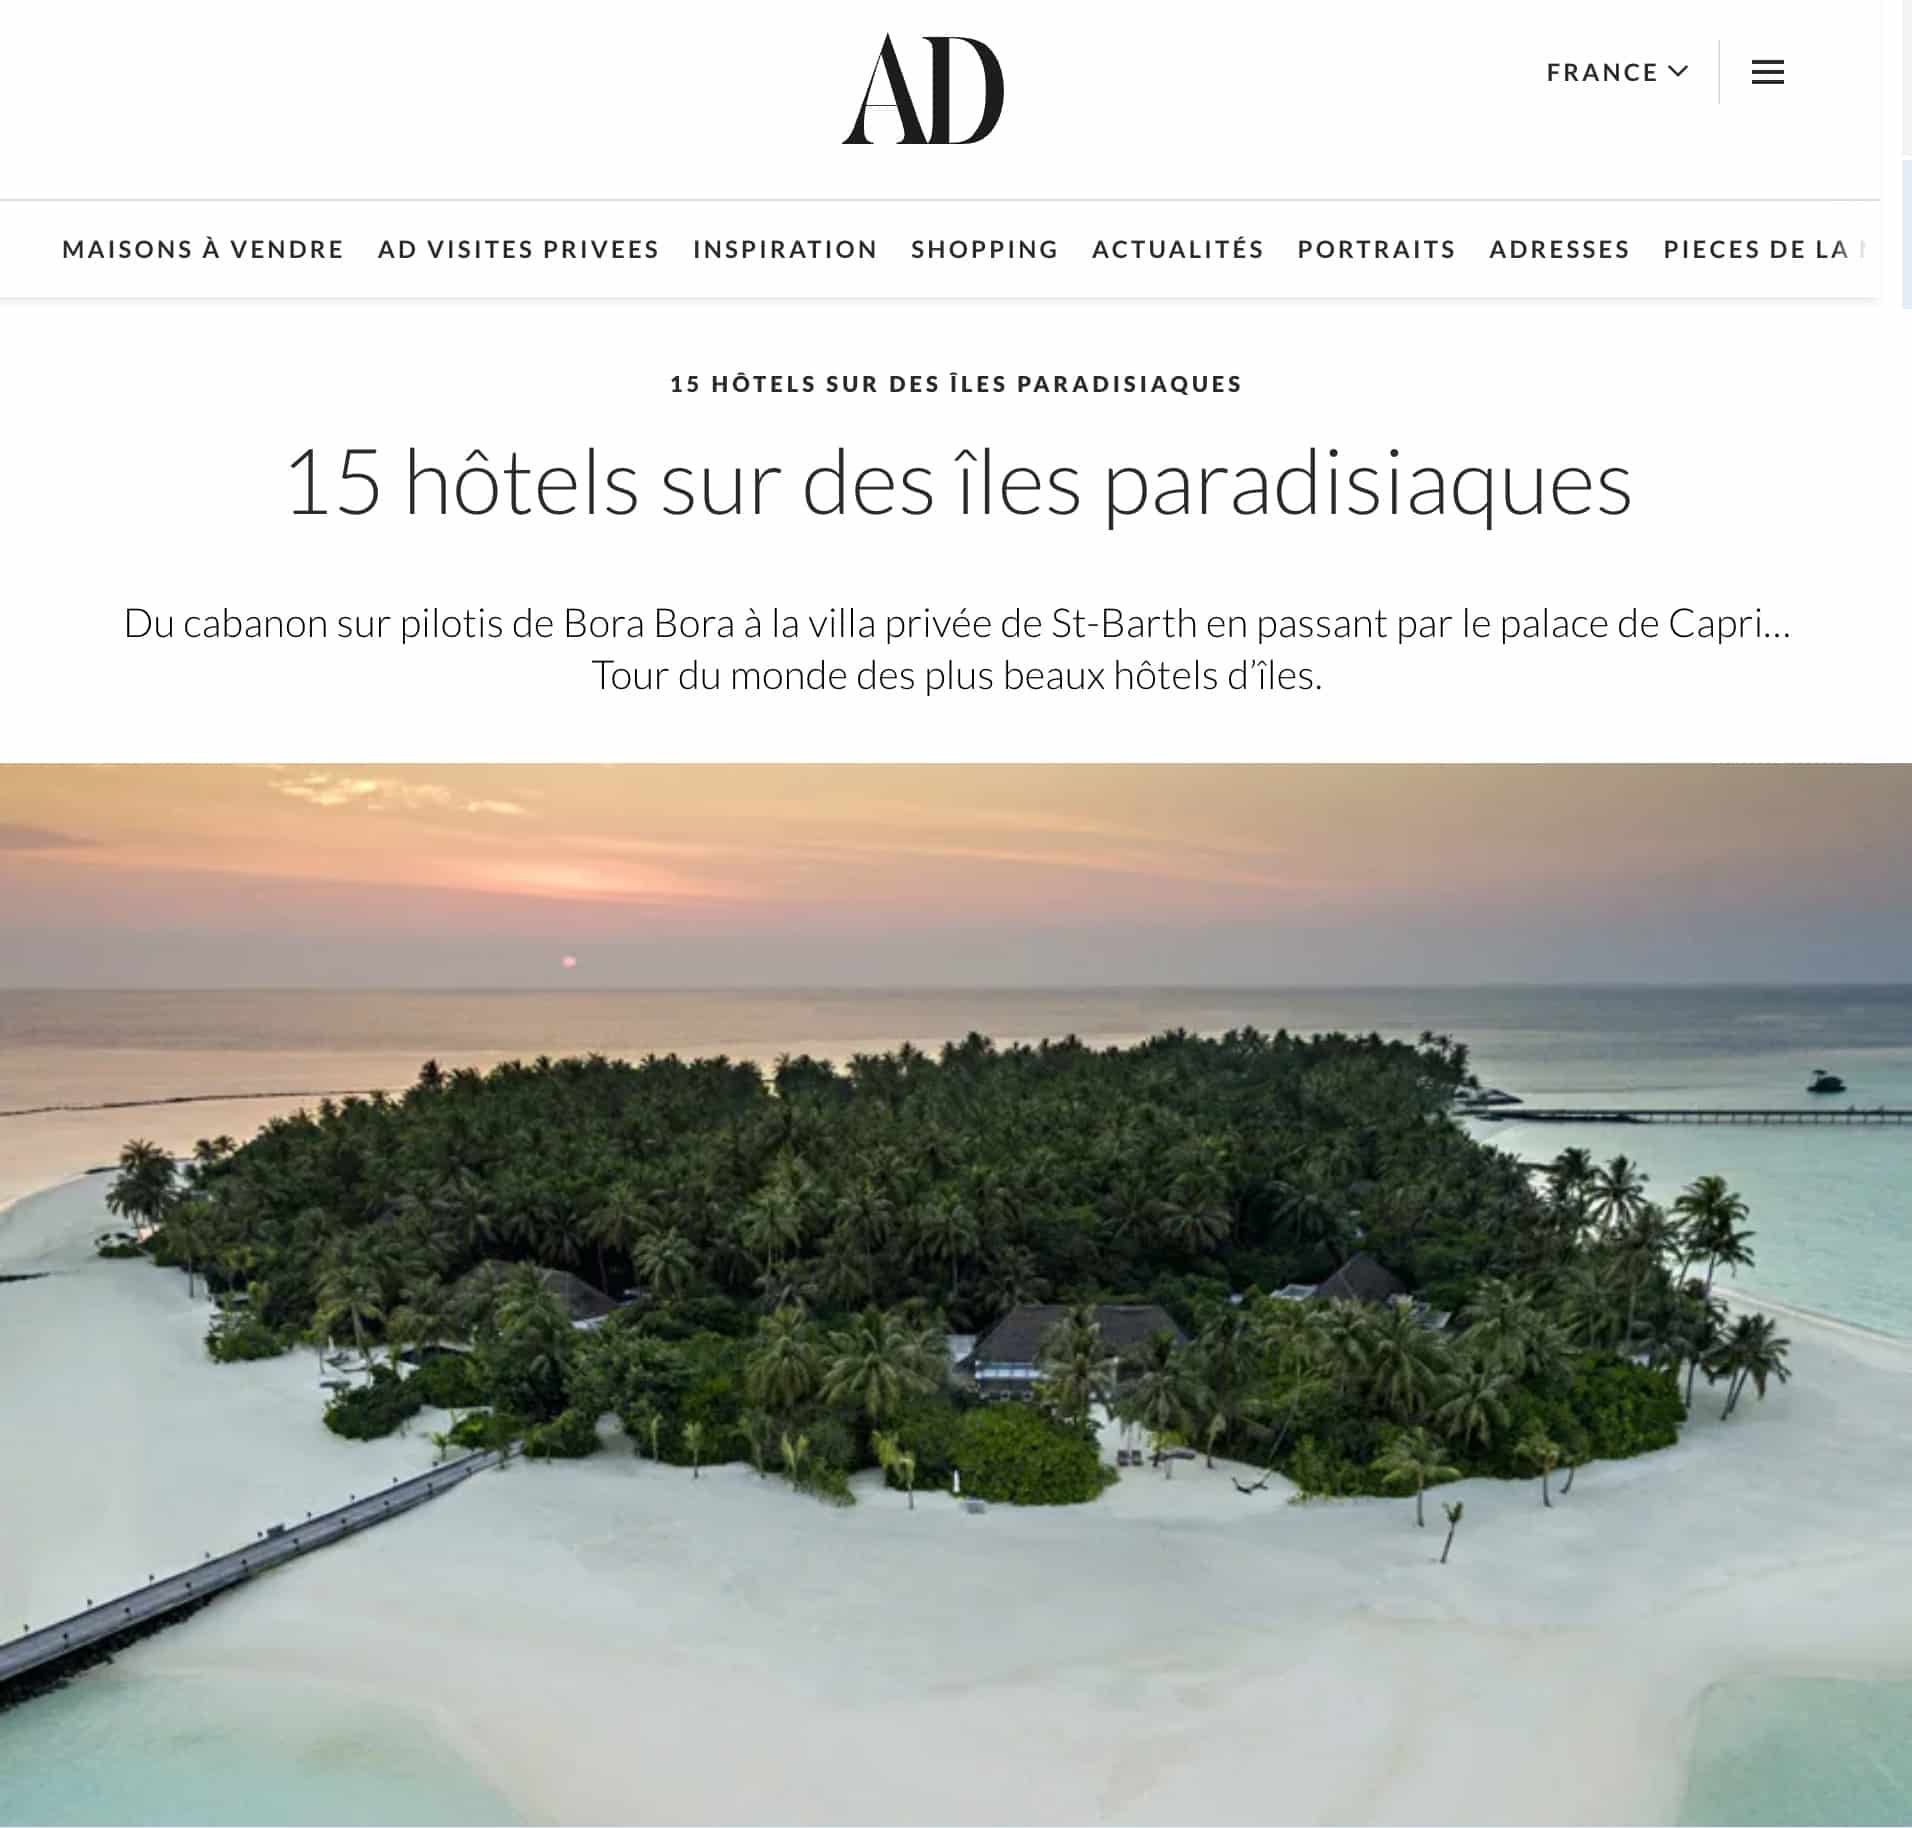 AD Magazine 15 hotels sur des iles paradisiaques